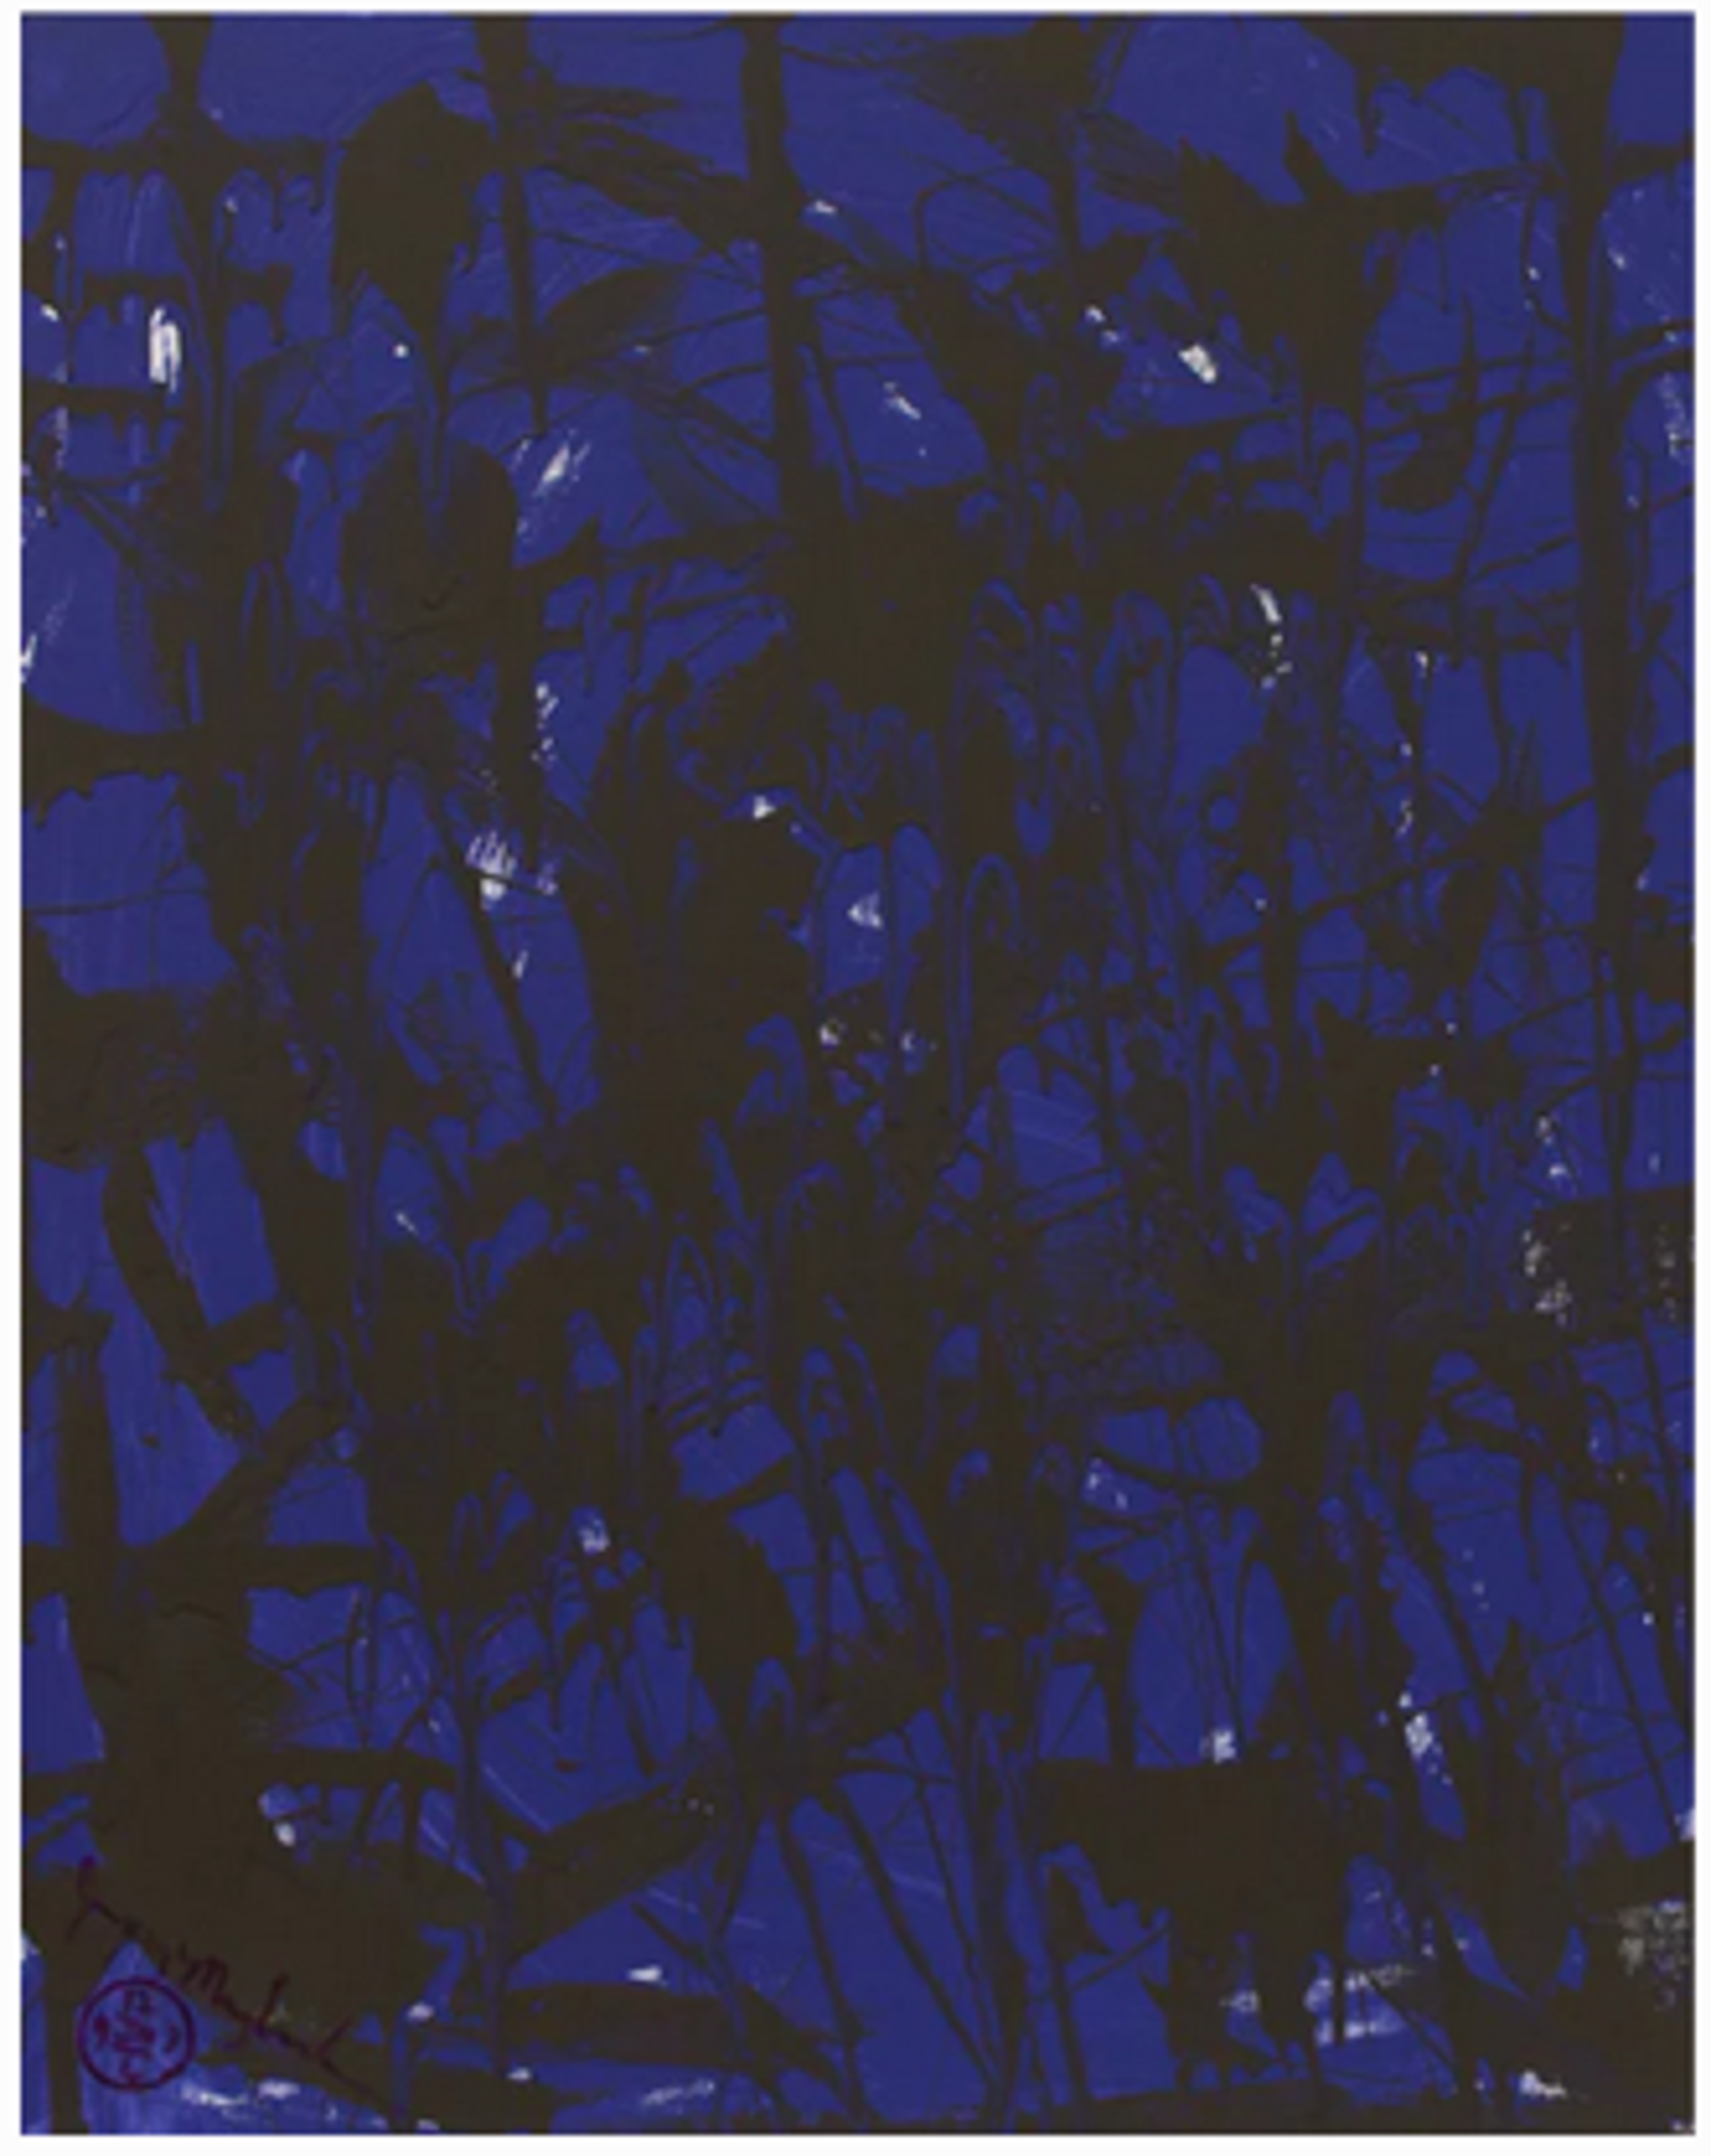 Blue Nights by Jumper Maybach